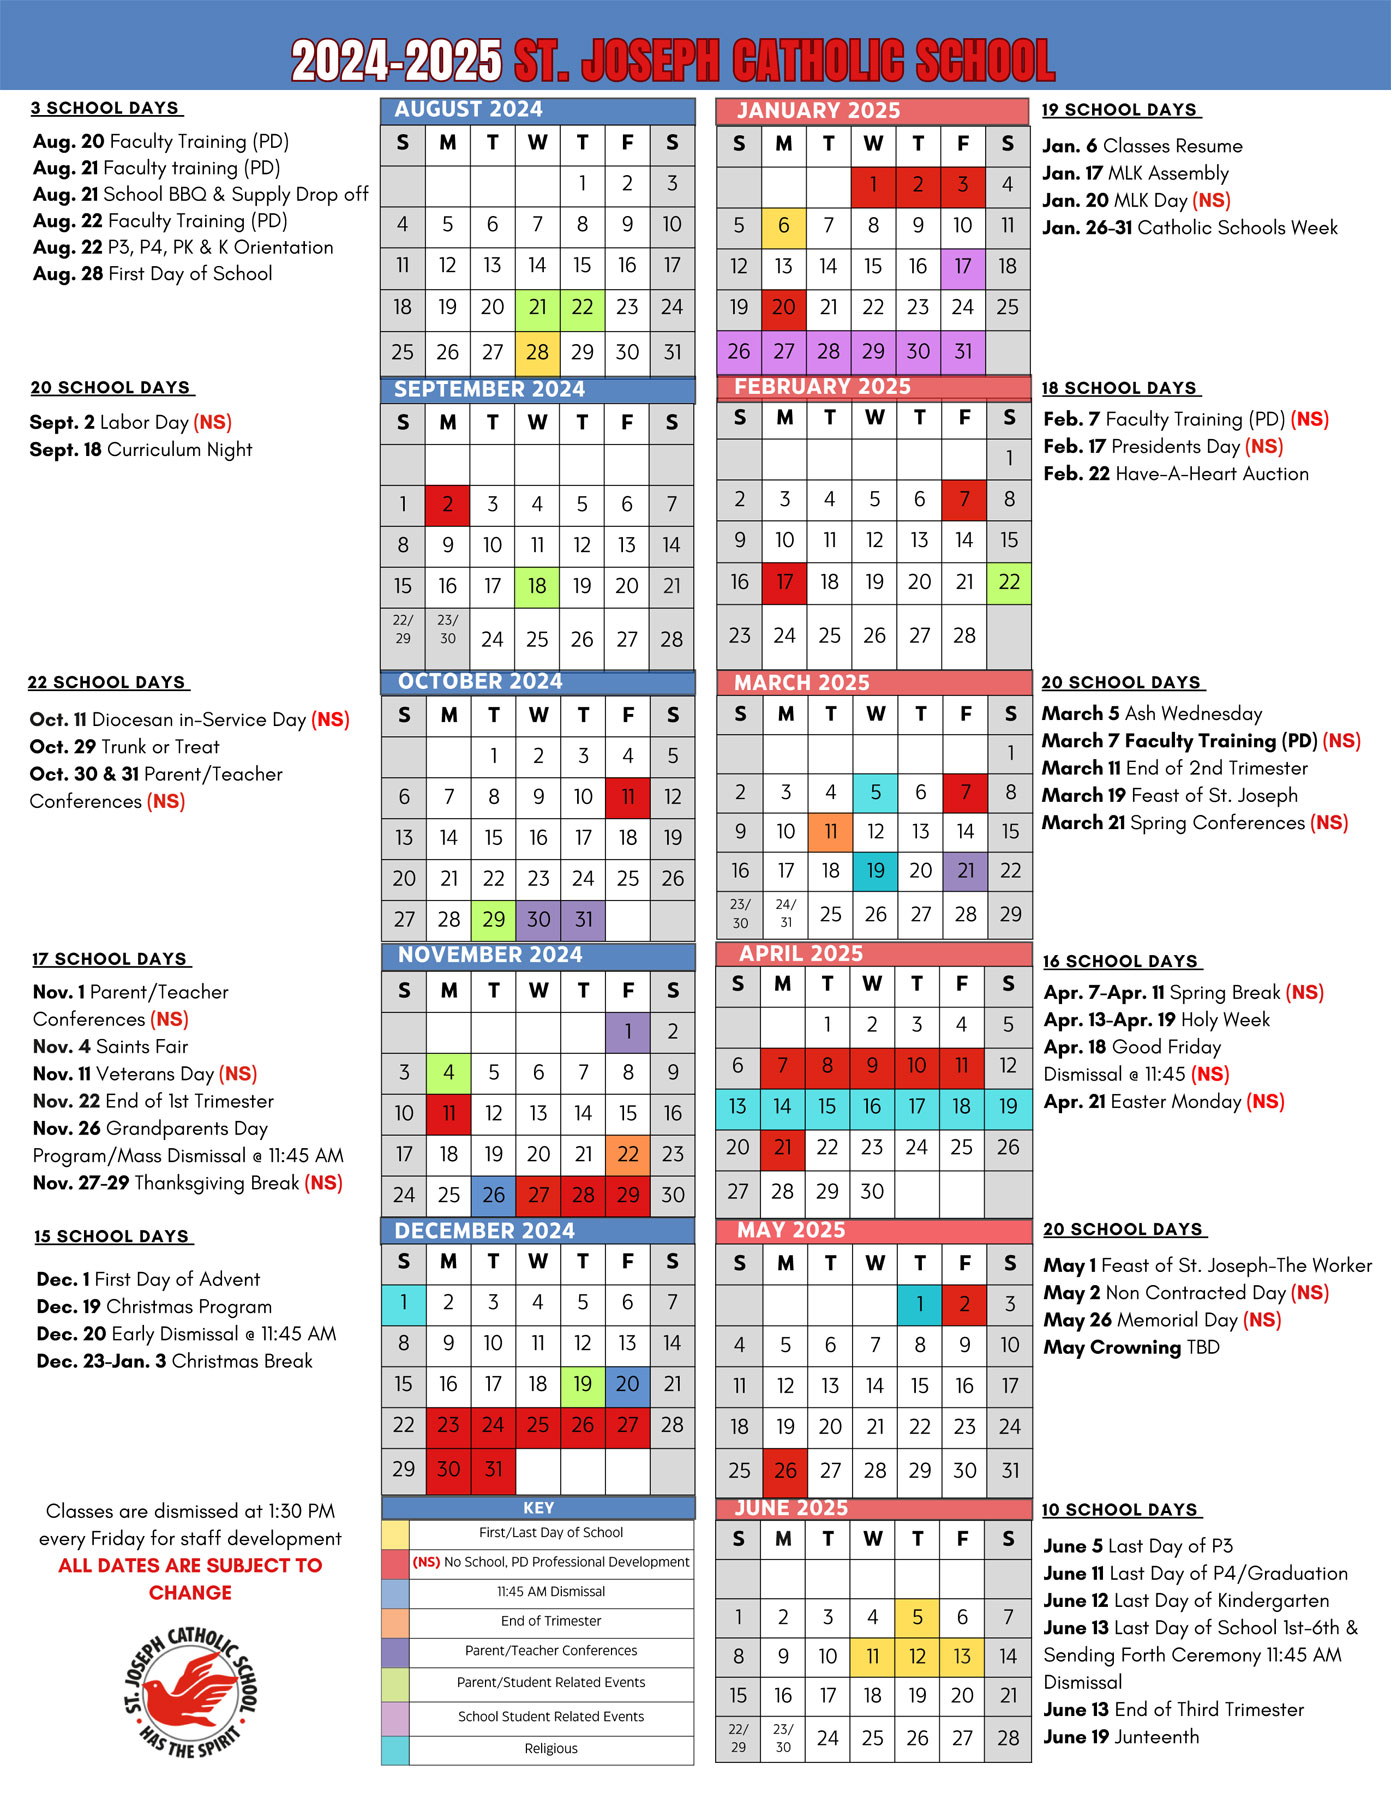 2024-2025 Yearly Calendar